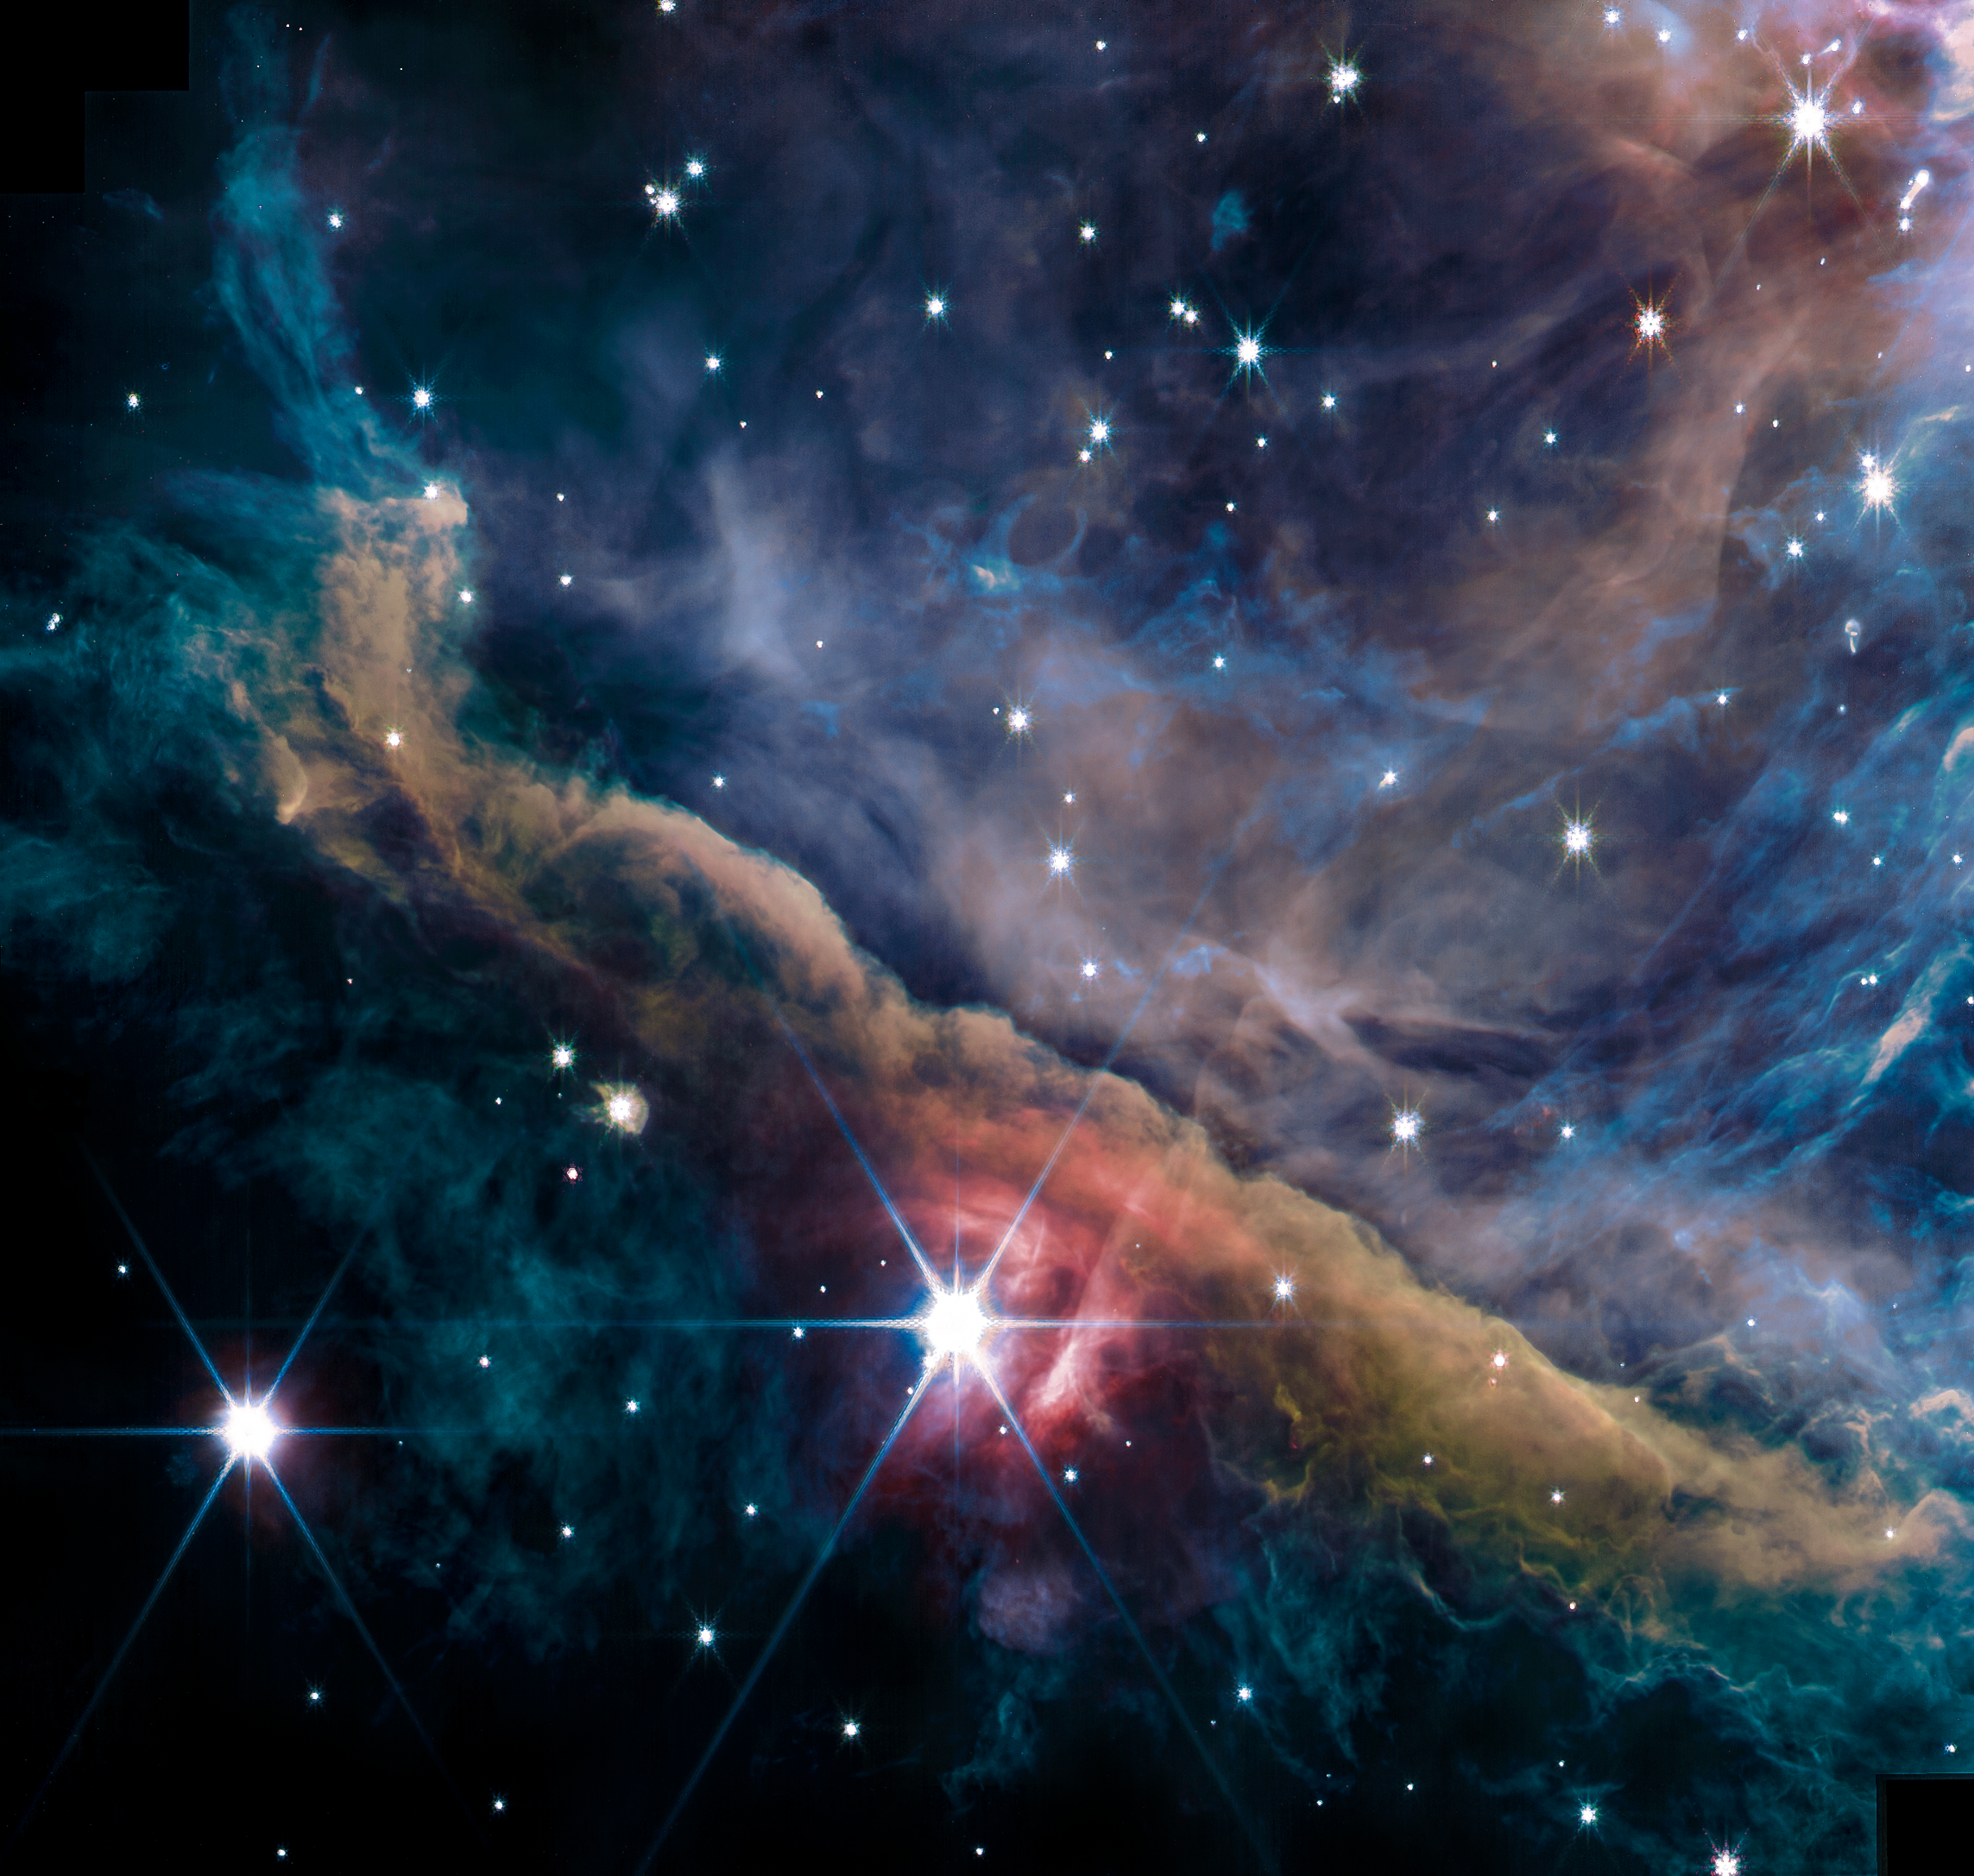 What the Orion Nebula Looks Like to Webb Telescope Vs Hubble Telescope